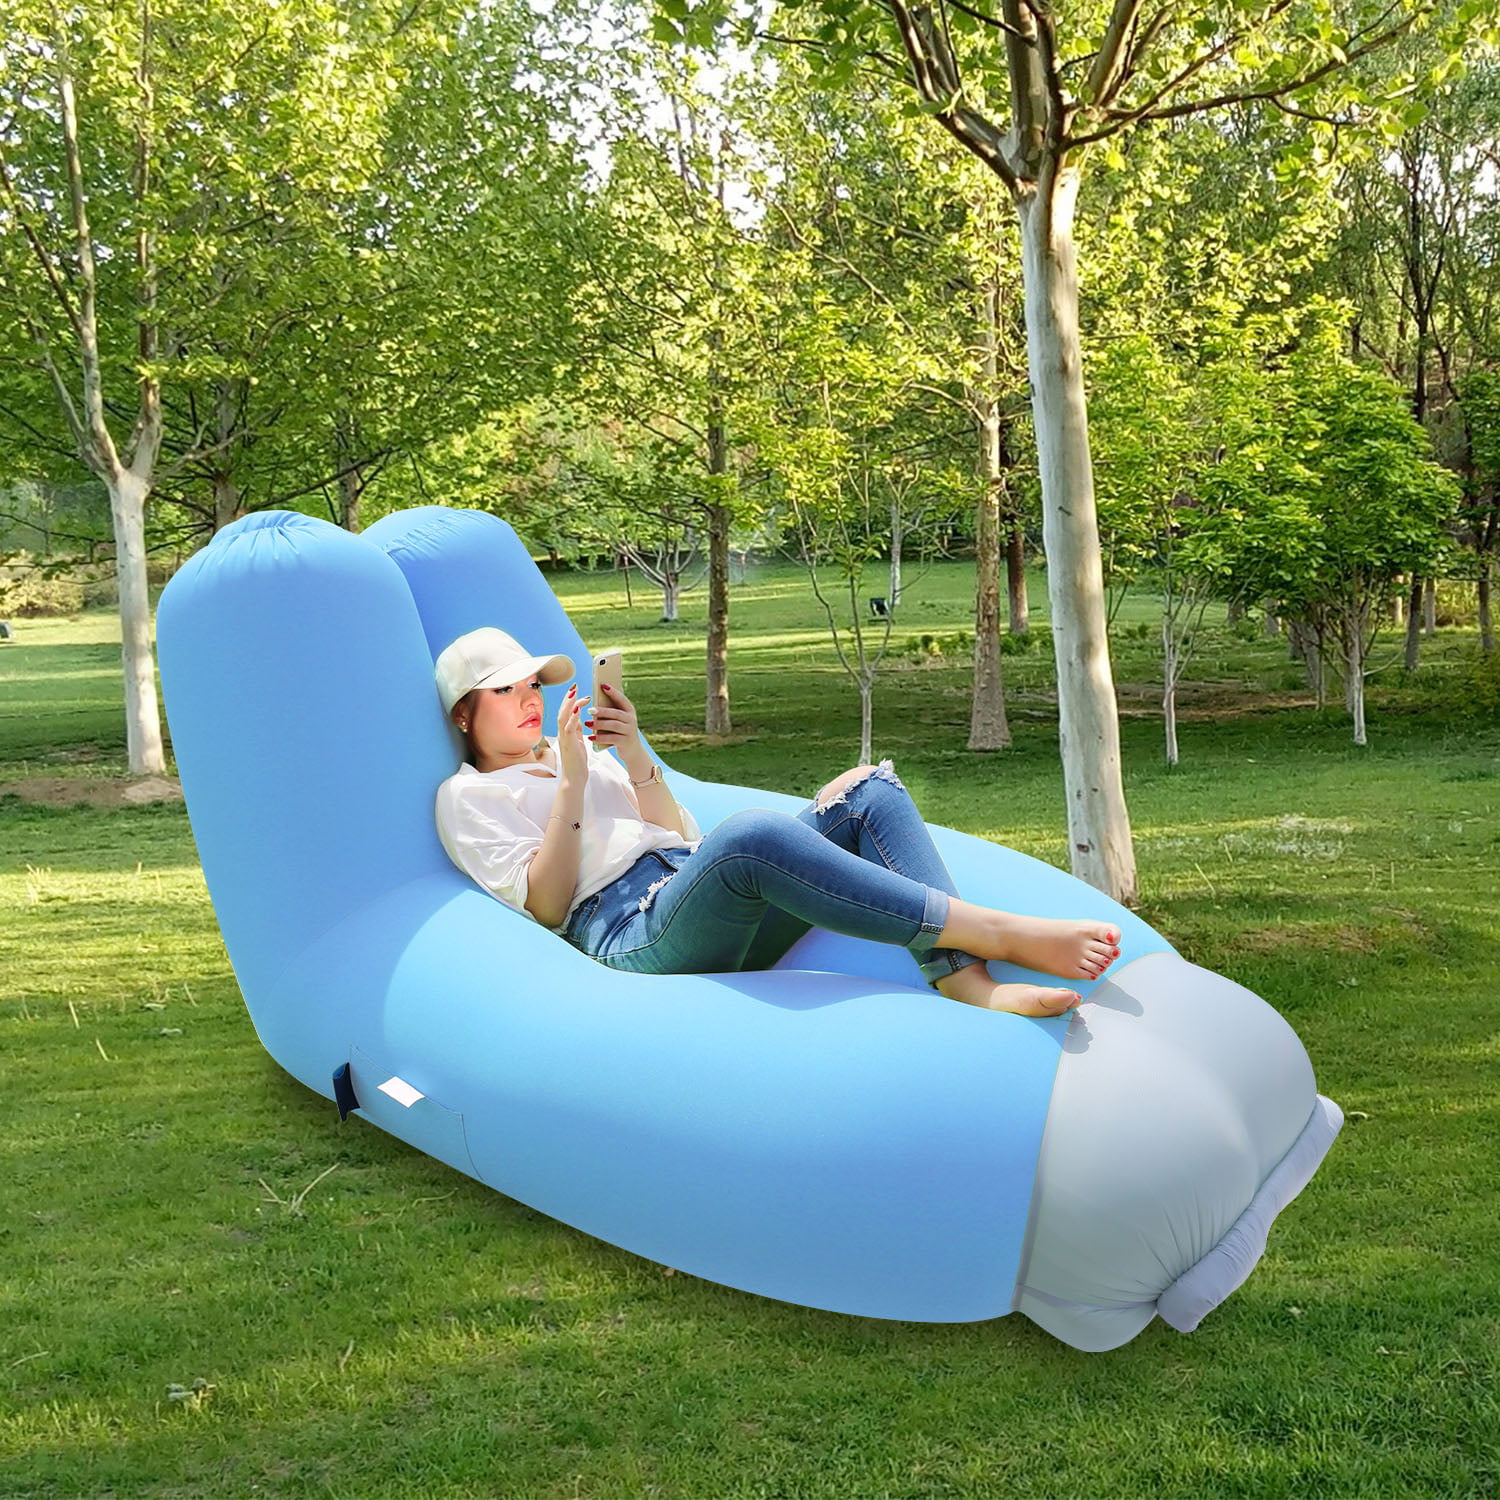 Simple Portable Beach Chair For Air Travel with Simple Decor